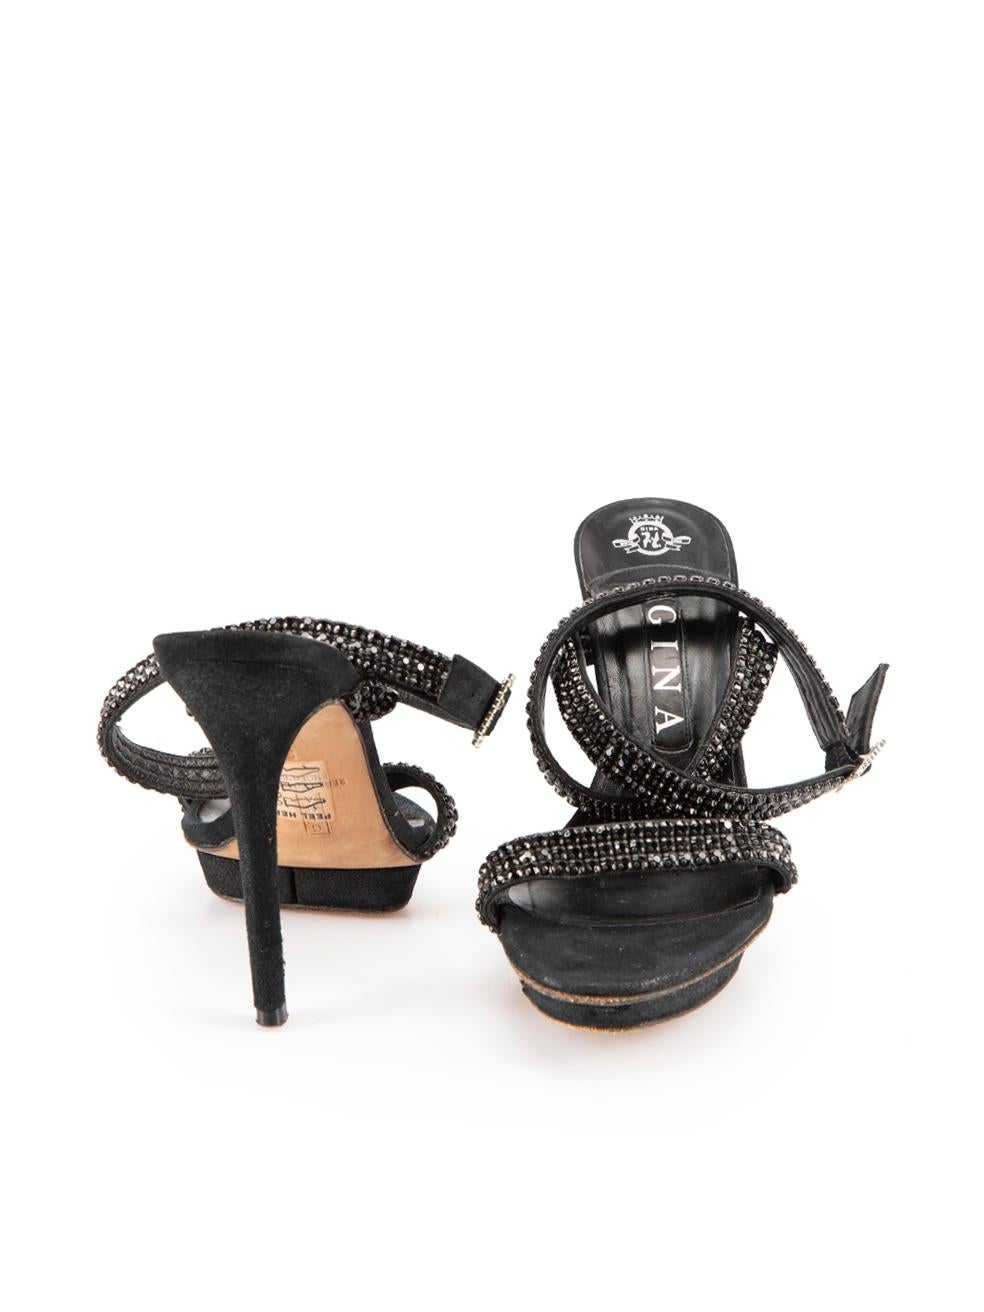 Gina Black Crystal Embellish Platform Sandals Size UK 5 In Excellent Condition For Sale In London, GB